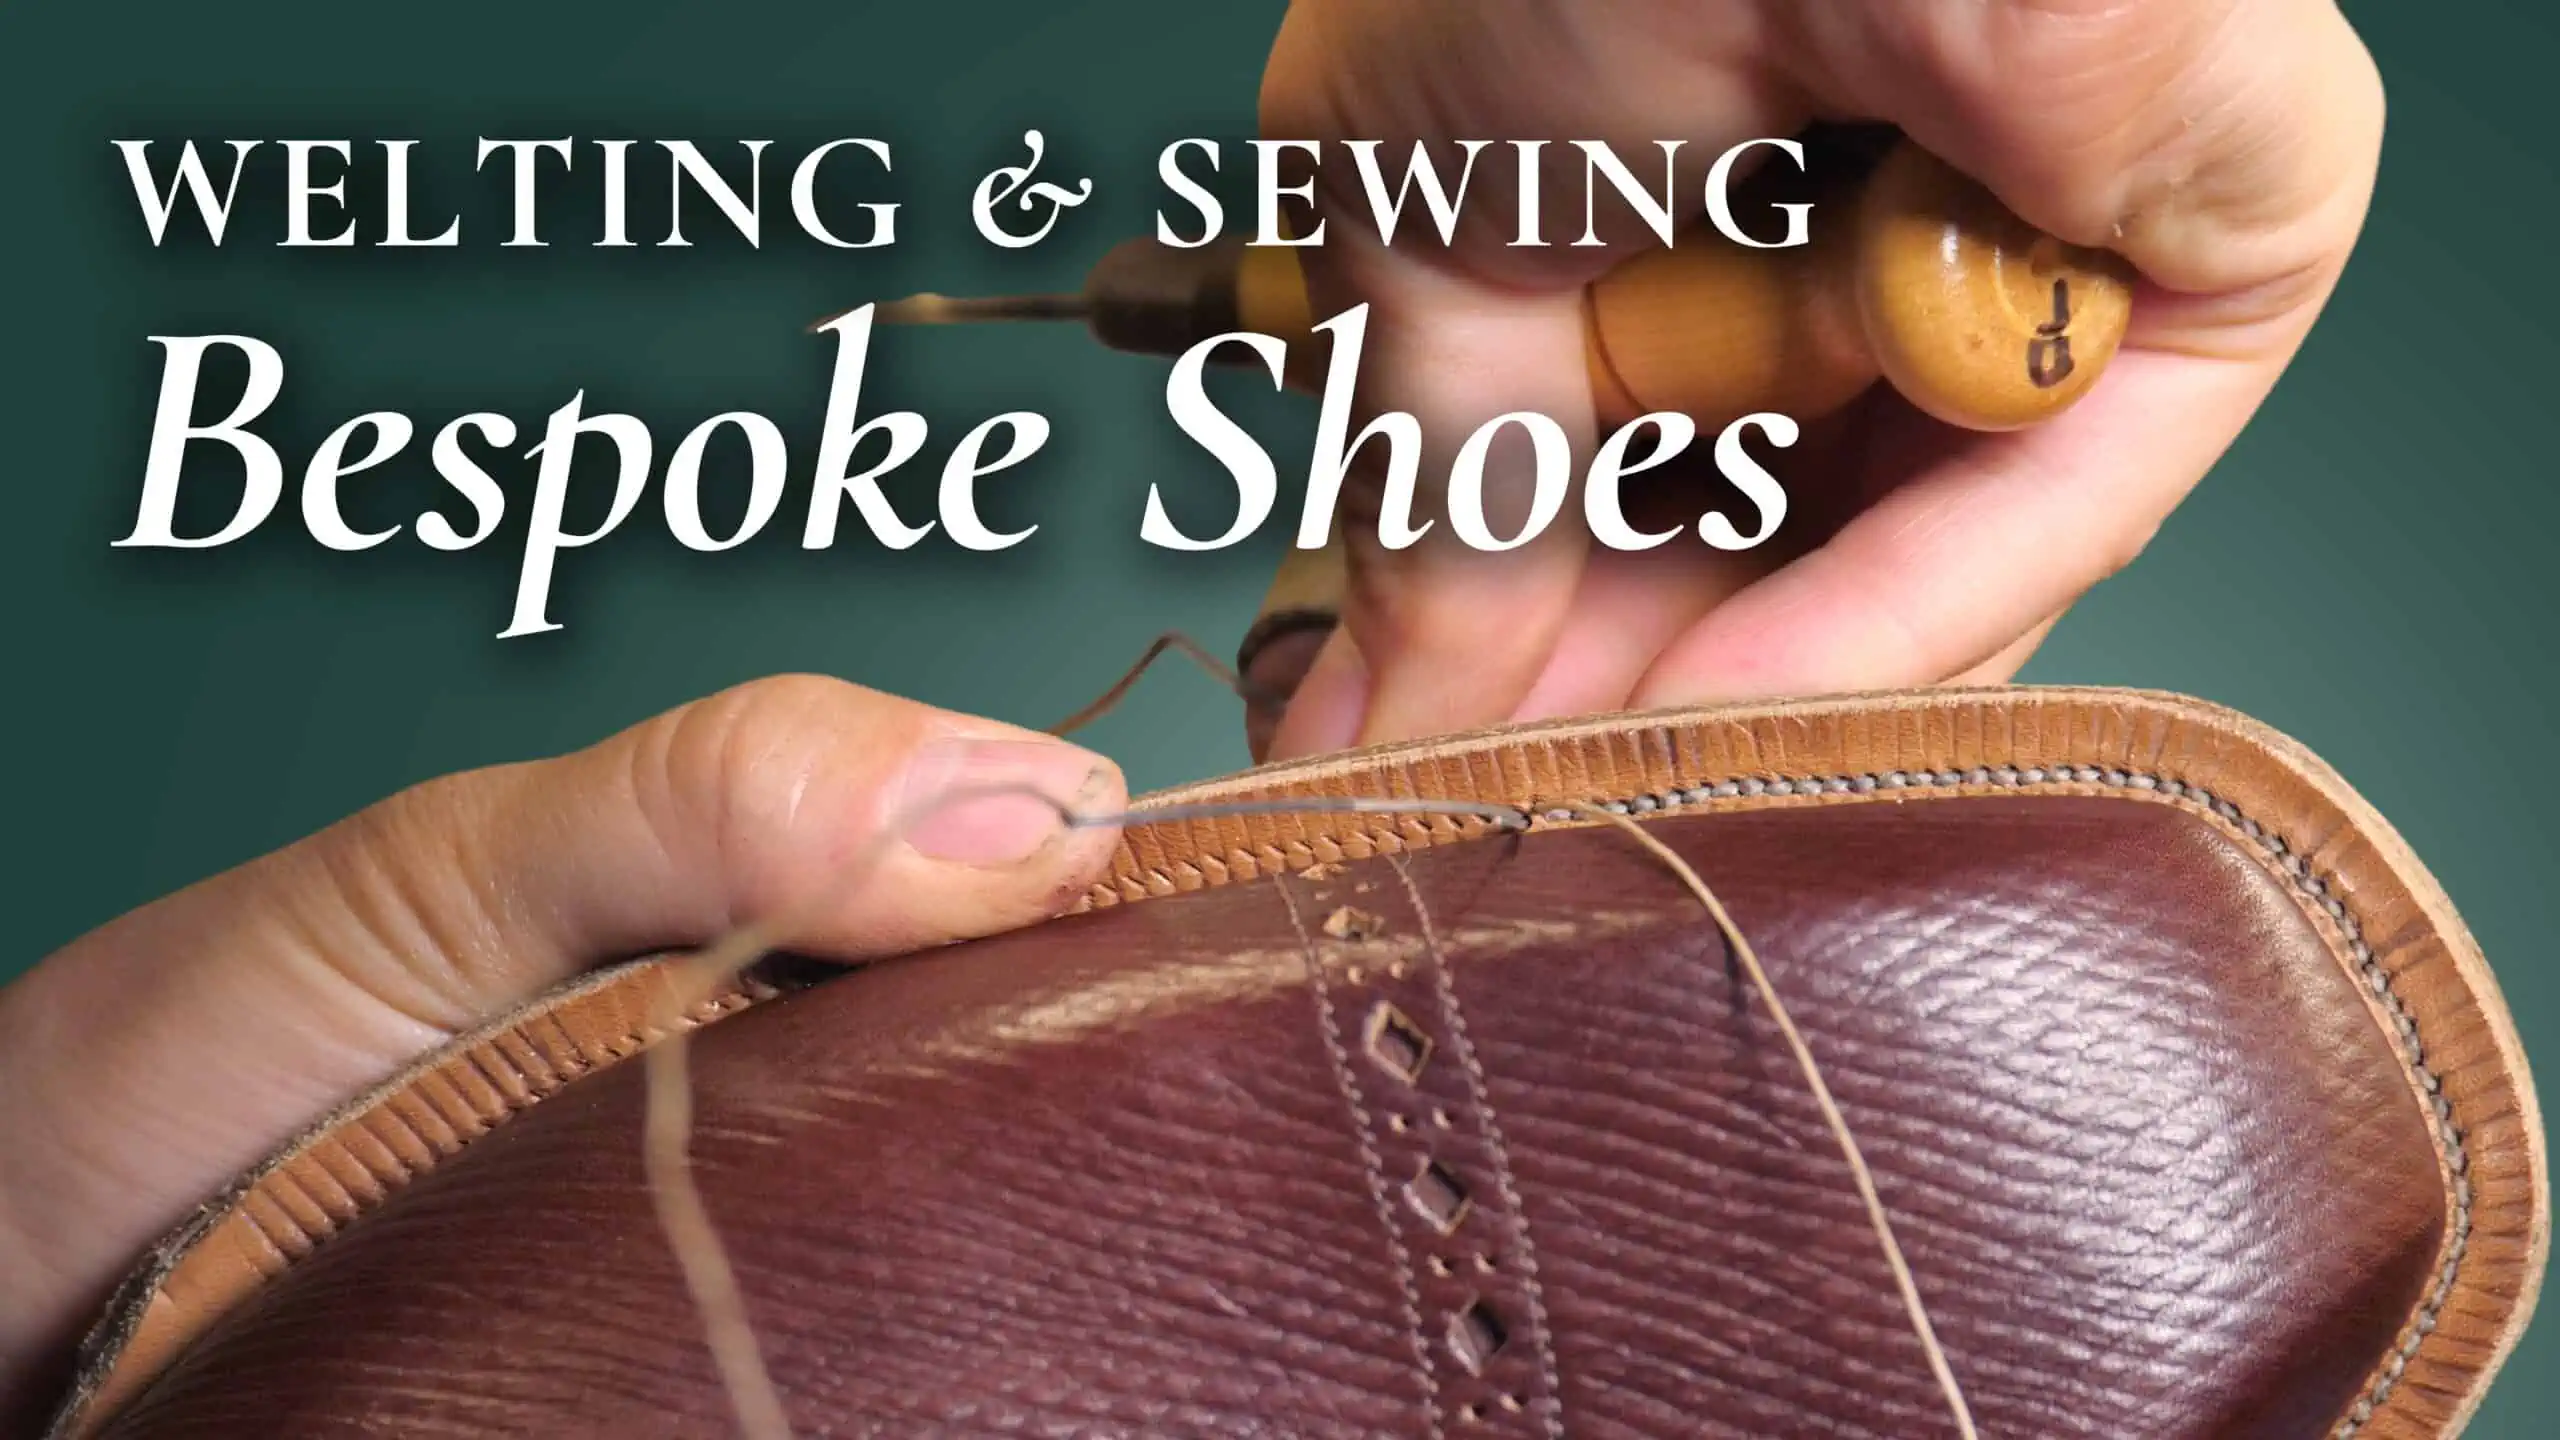 Welting Sewing Bespoke Shoes 3840x2160 scaled